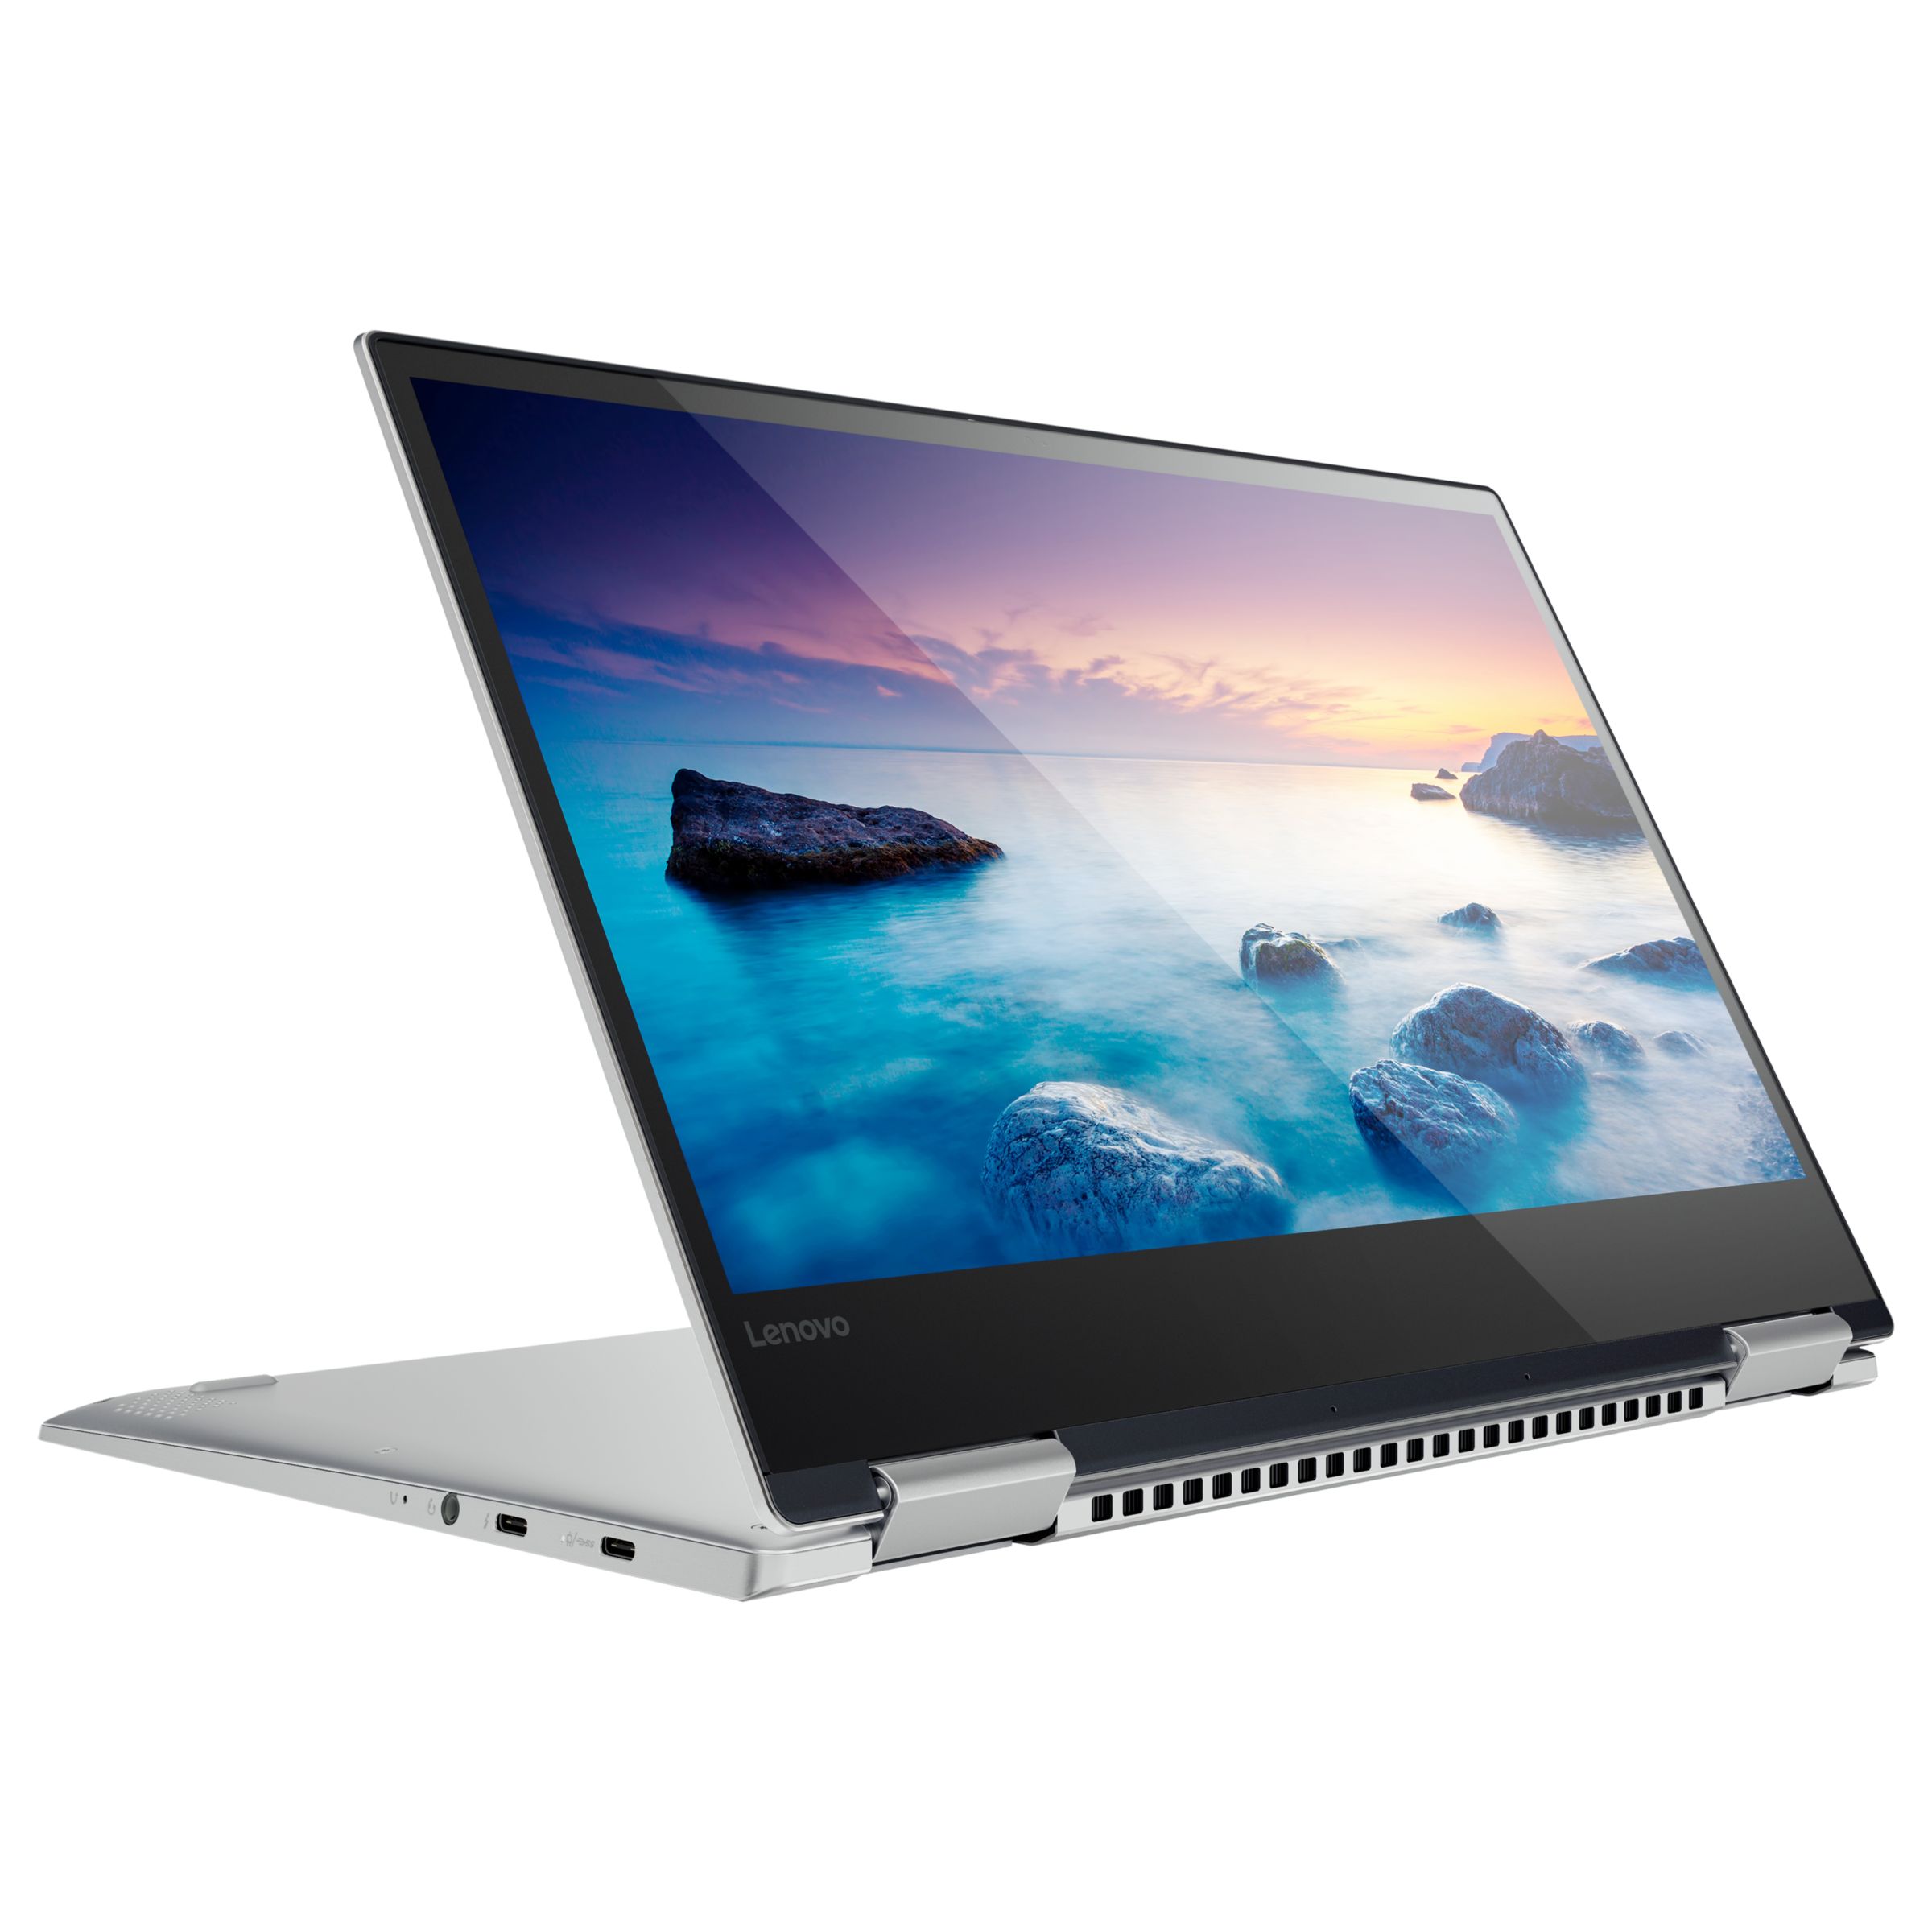 Lenovo Yoga 720 Convertible Laptop with Active Pen, Intel Core i5, 8GB RAM, 256GB SSD, 13.3" Full HD, Platinum